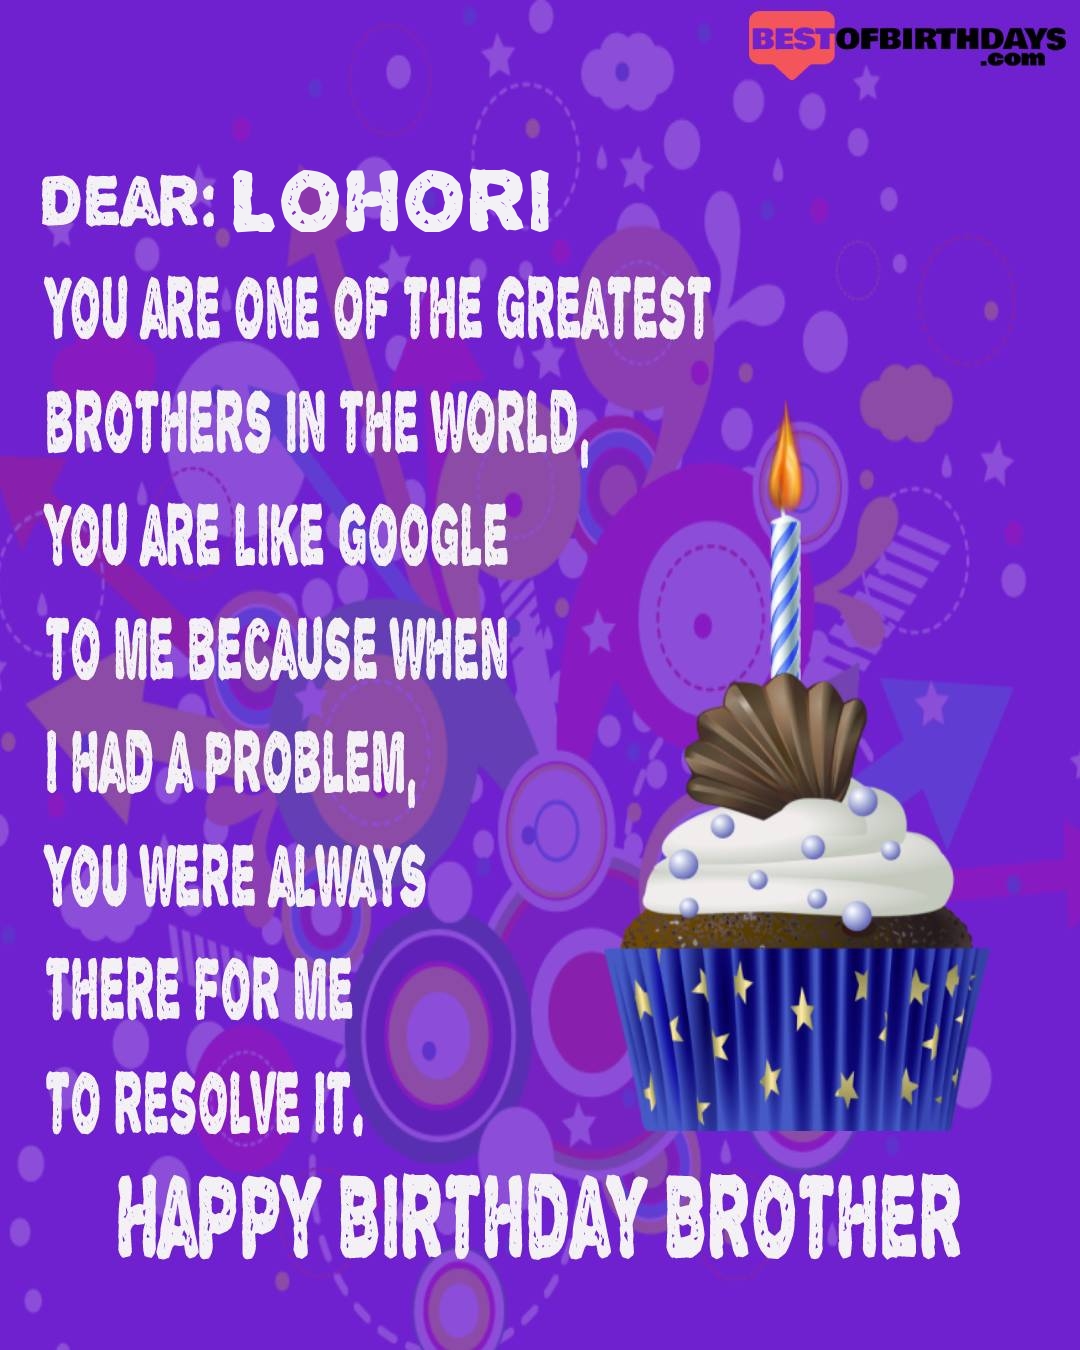 Happy birthday lohori bhai brother bro